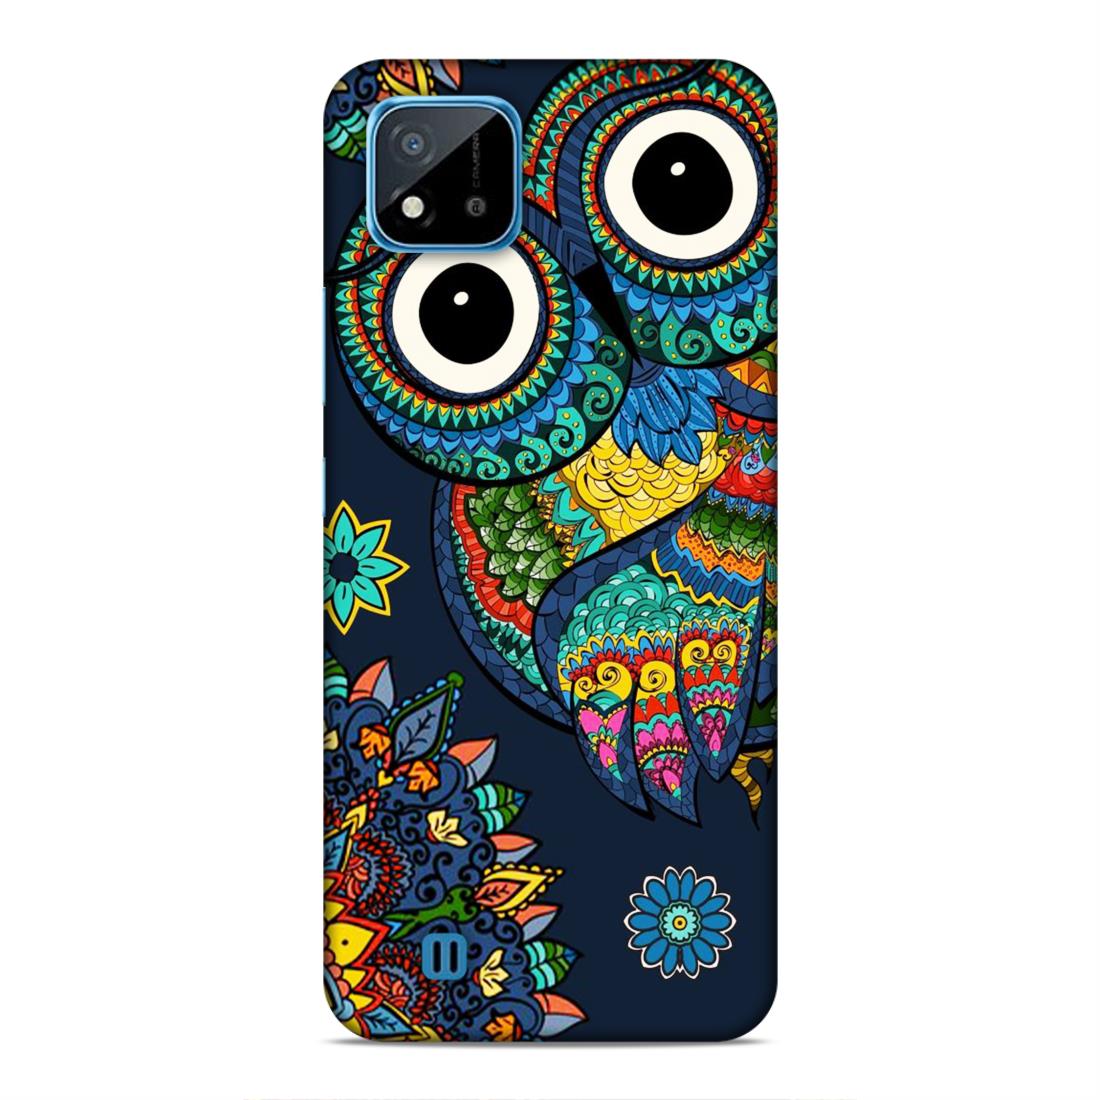 Owl and Mandala Flower Hard Back Case For Realme C20 / C11 2021